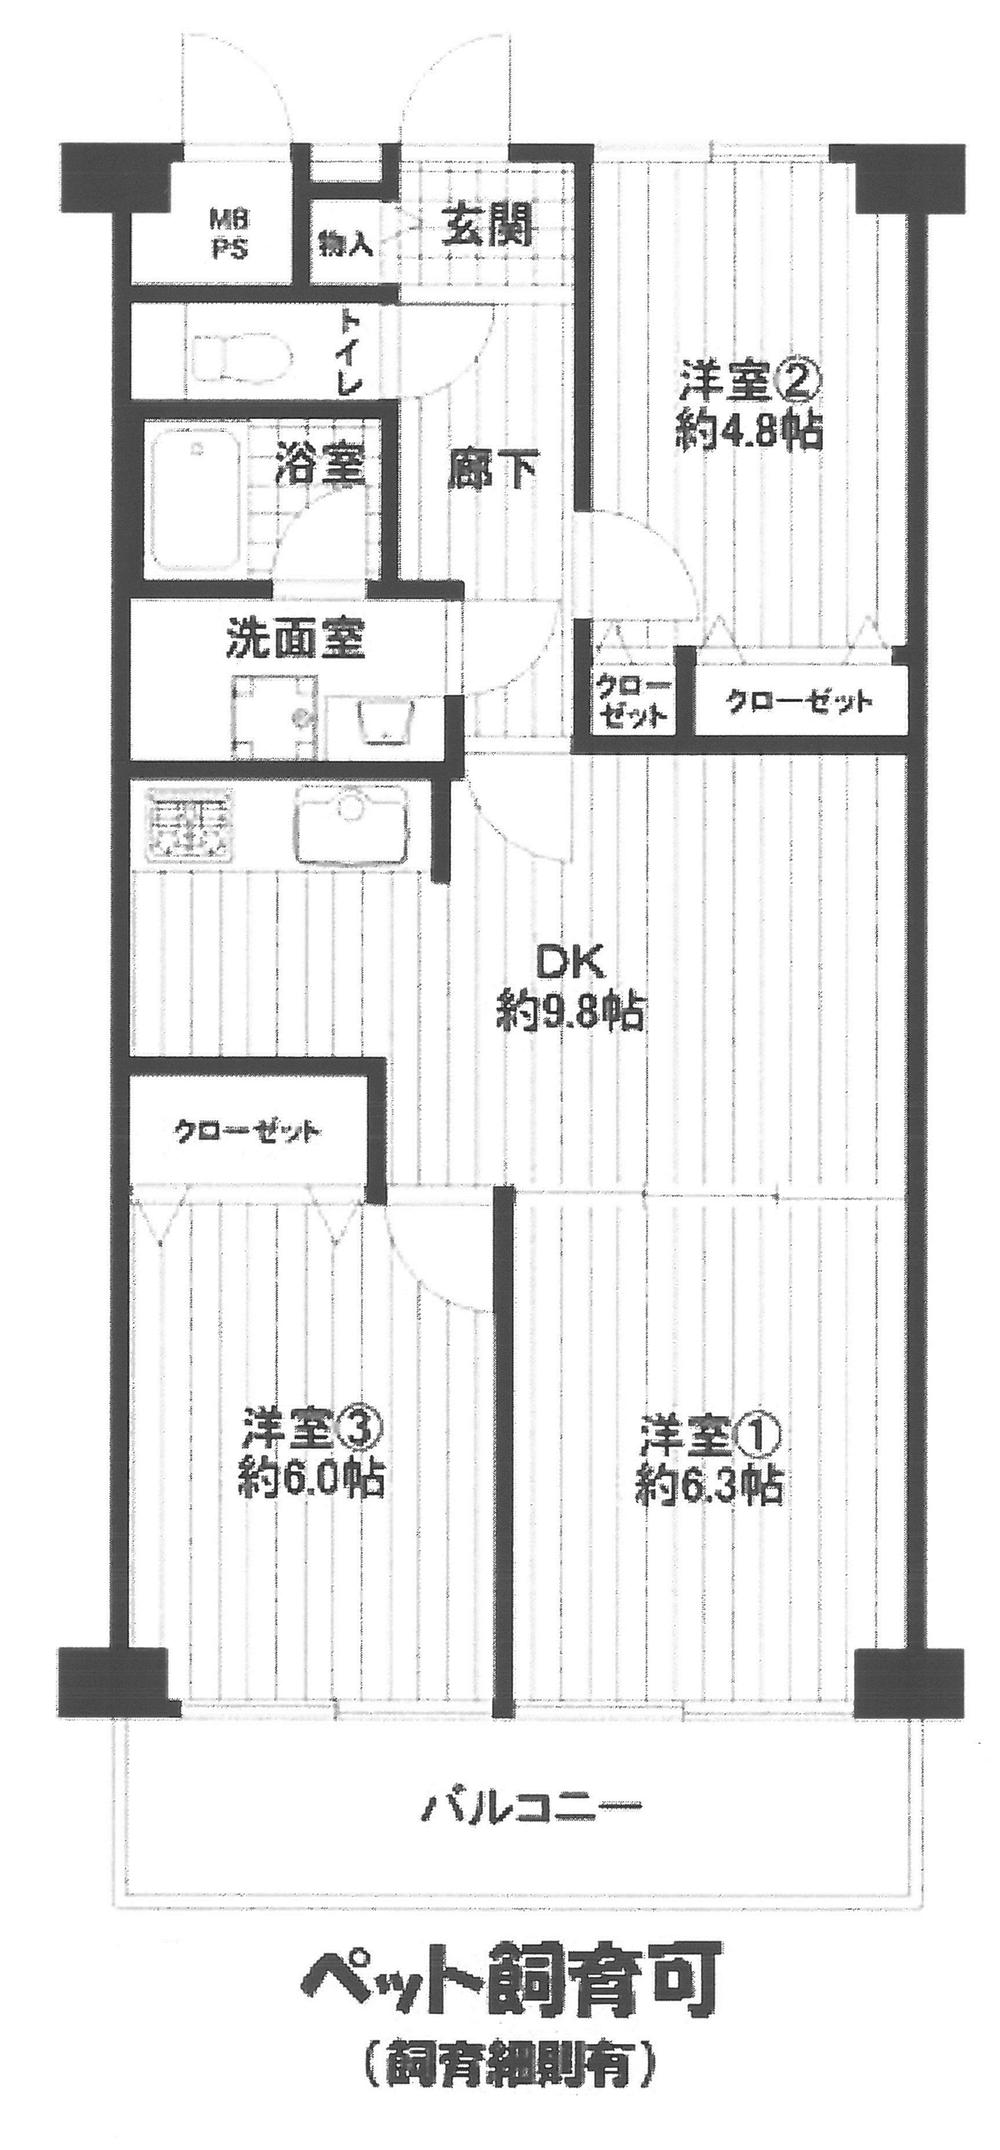 Floor plan. 3LDK, Price 16,900,000 yen, Footprint 61.6 sq m , Balcony area 6.72 sq m